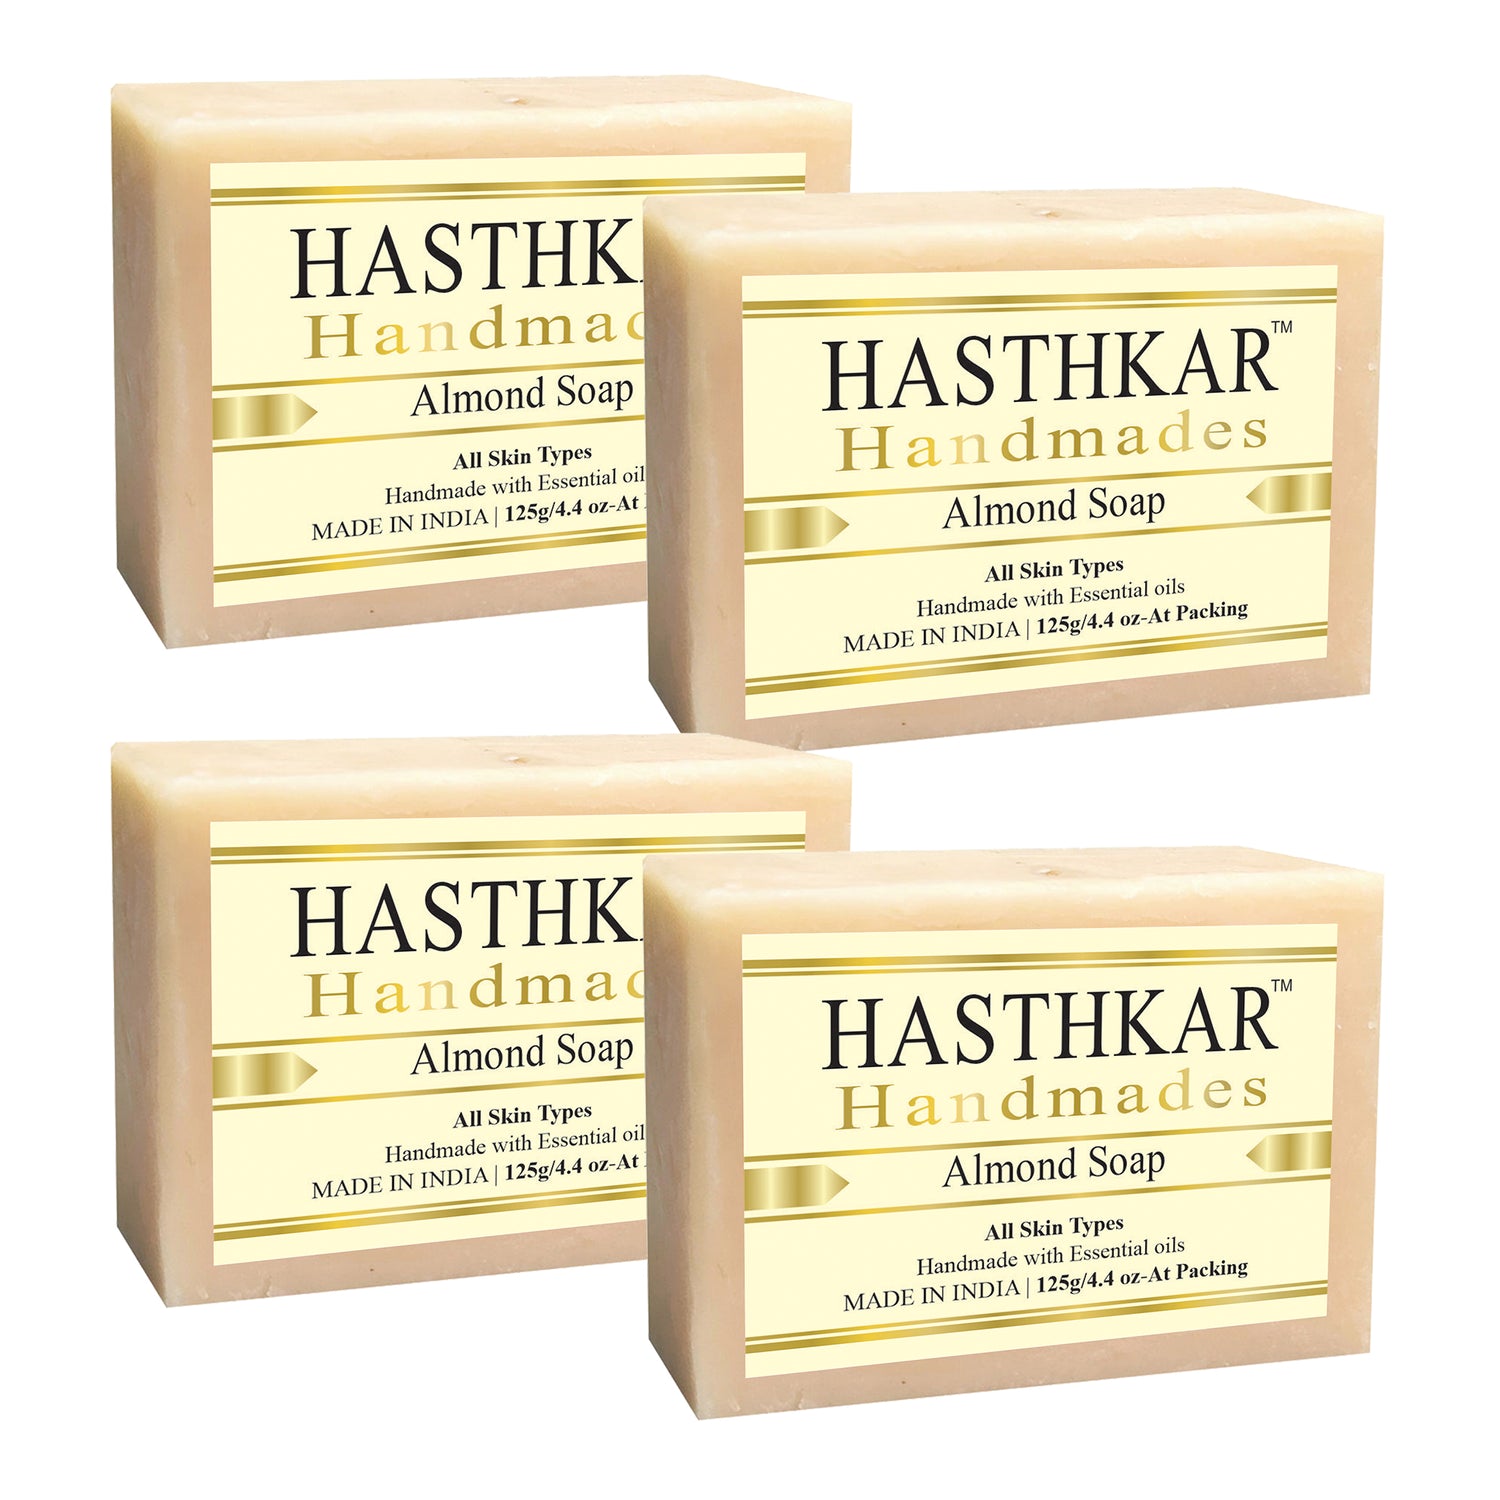 Hasthkar handmades Almond bathing soap men and women pack of 4